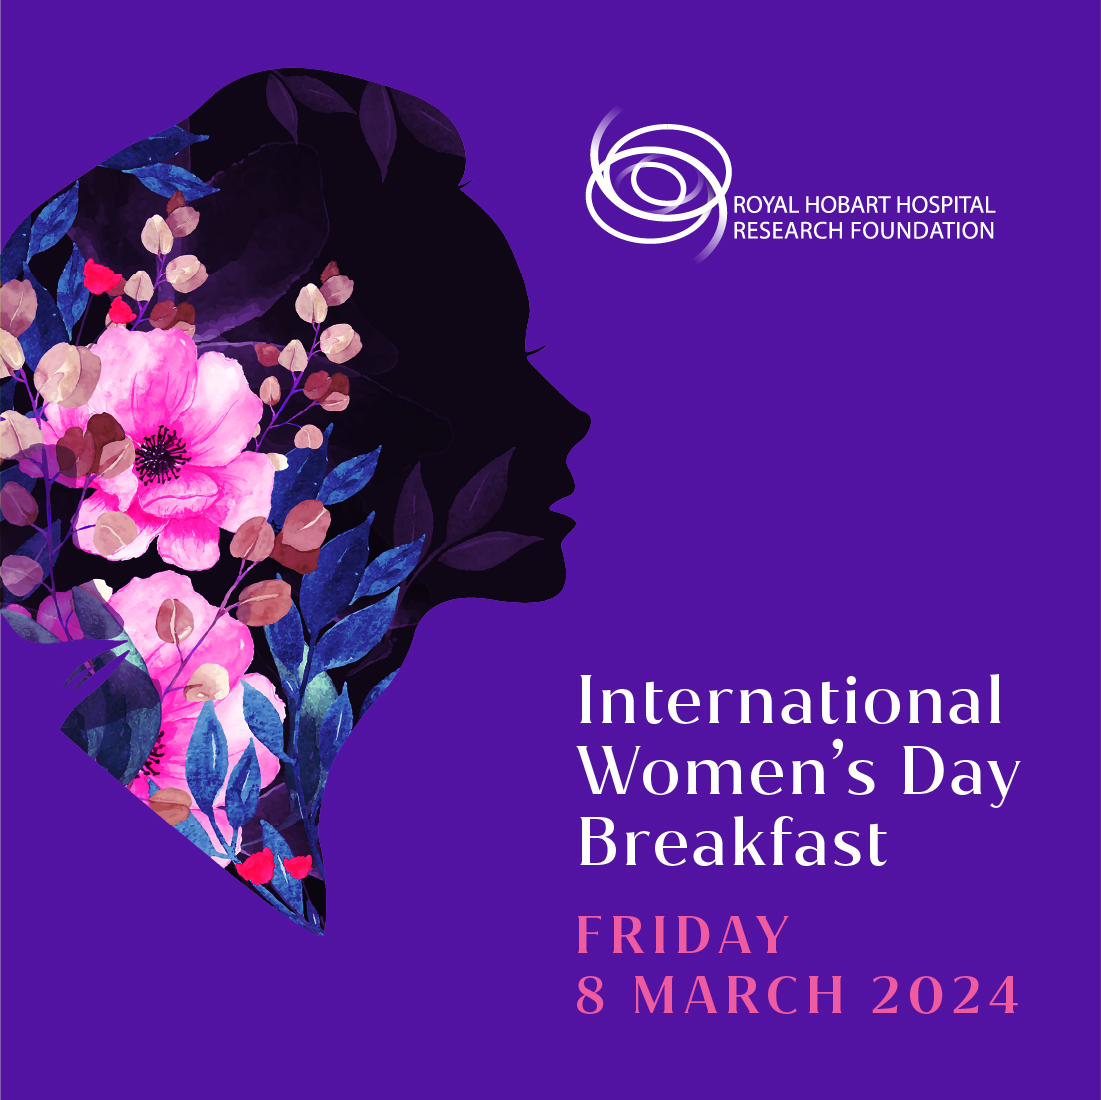 Royal Hobart Hospital Research Foundation International Women's Day Breakfast 2024